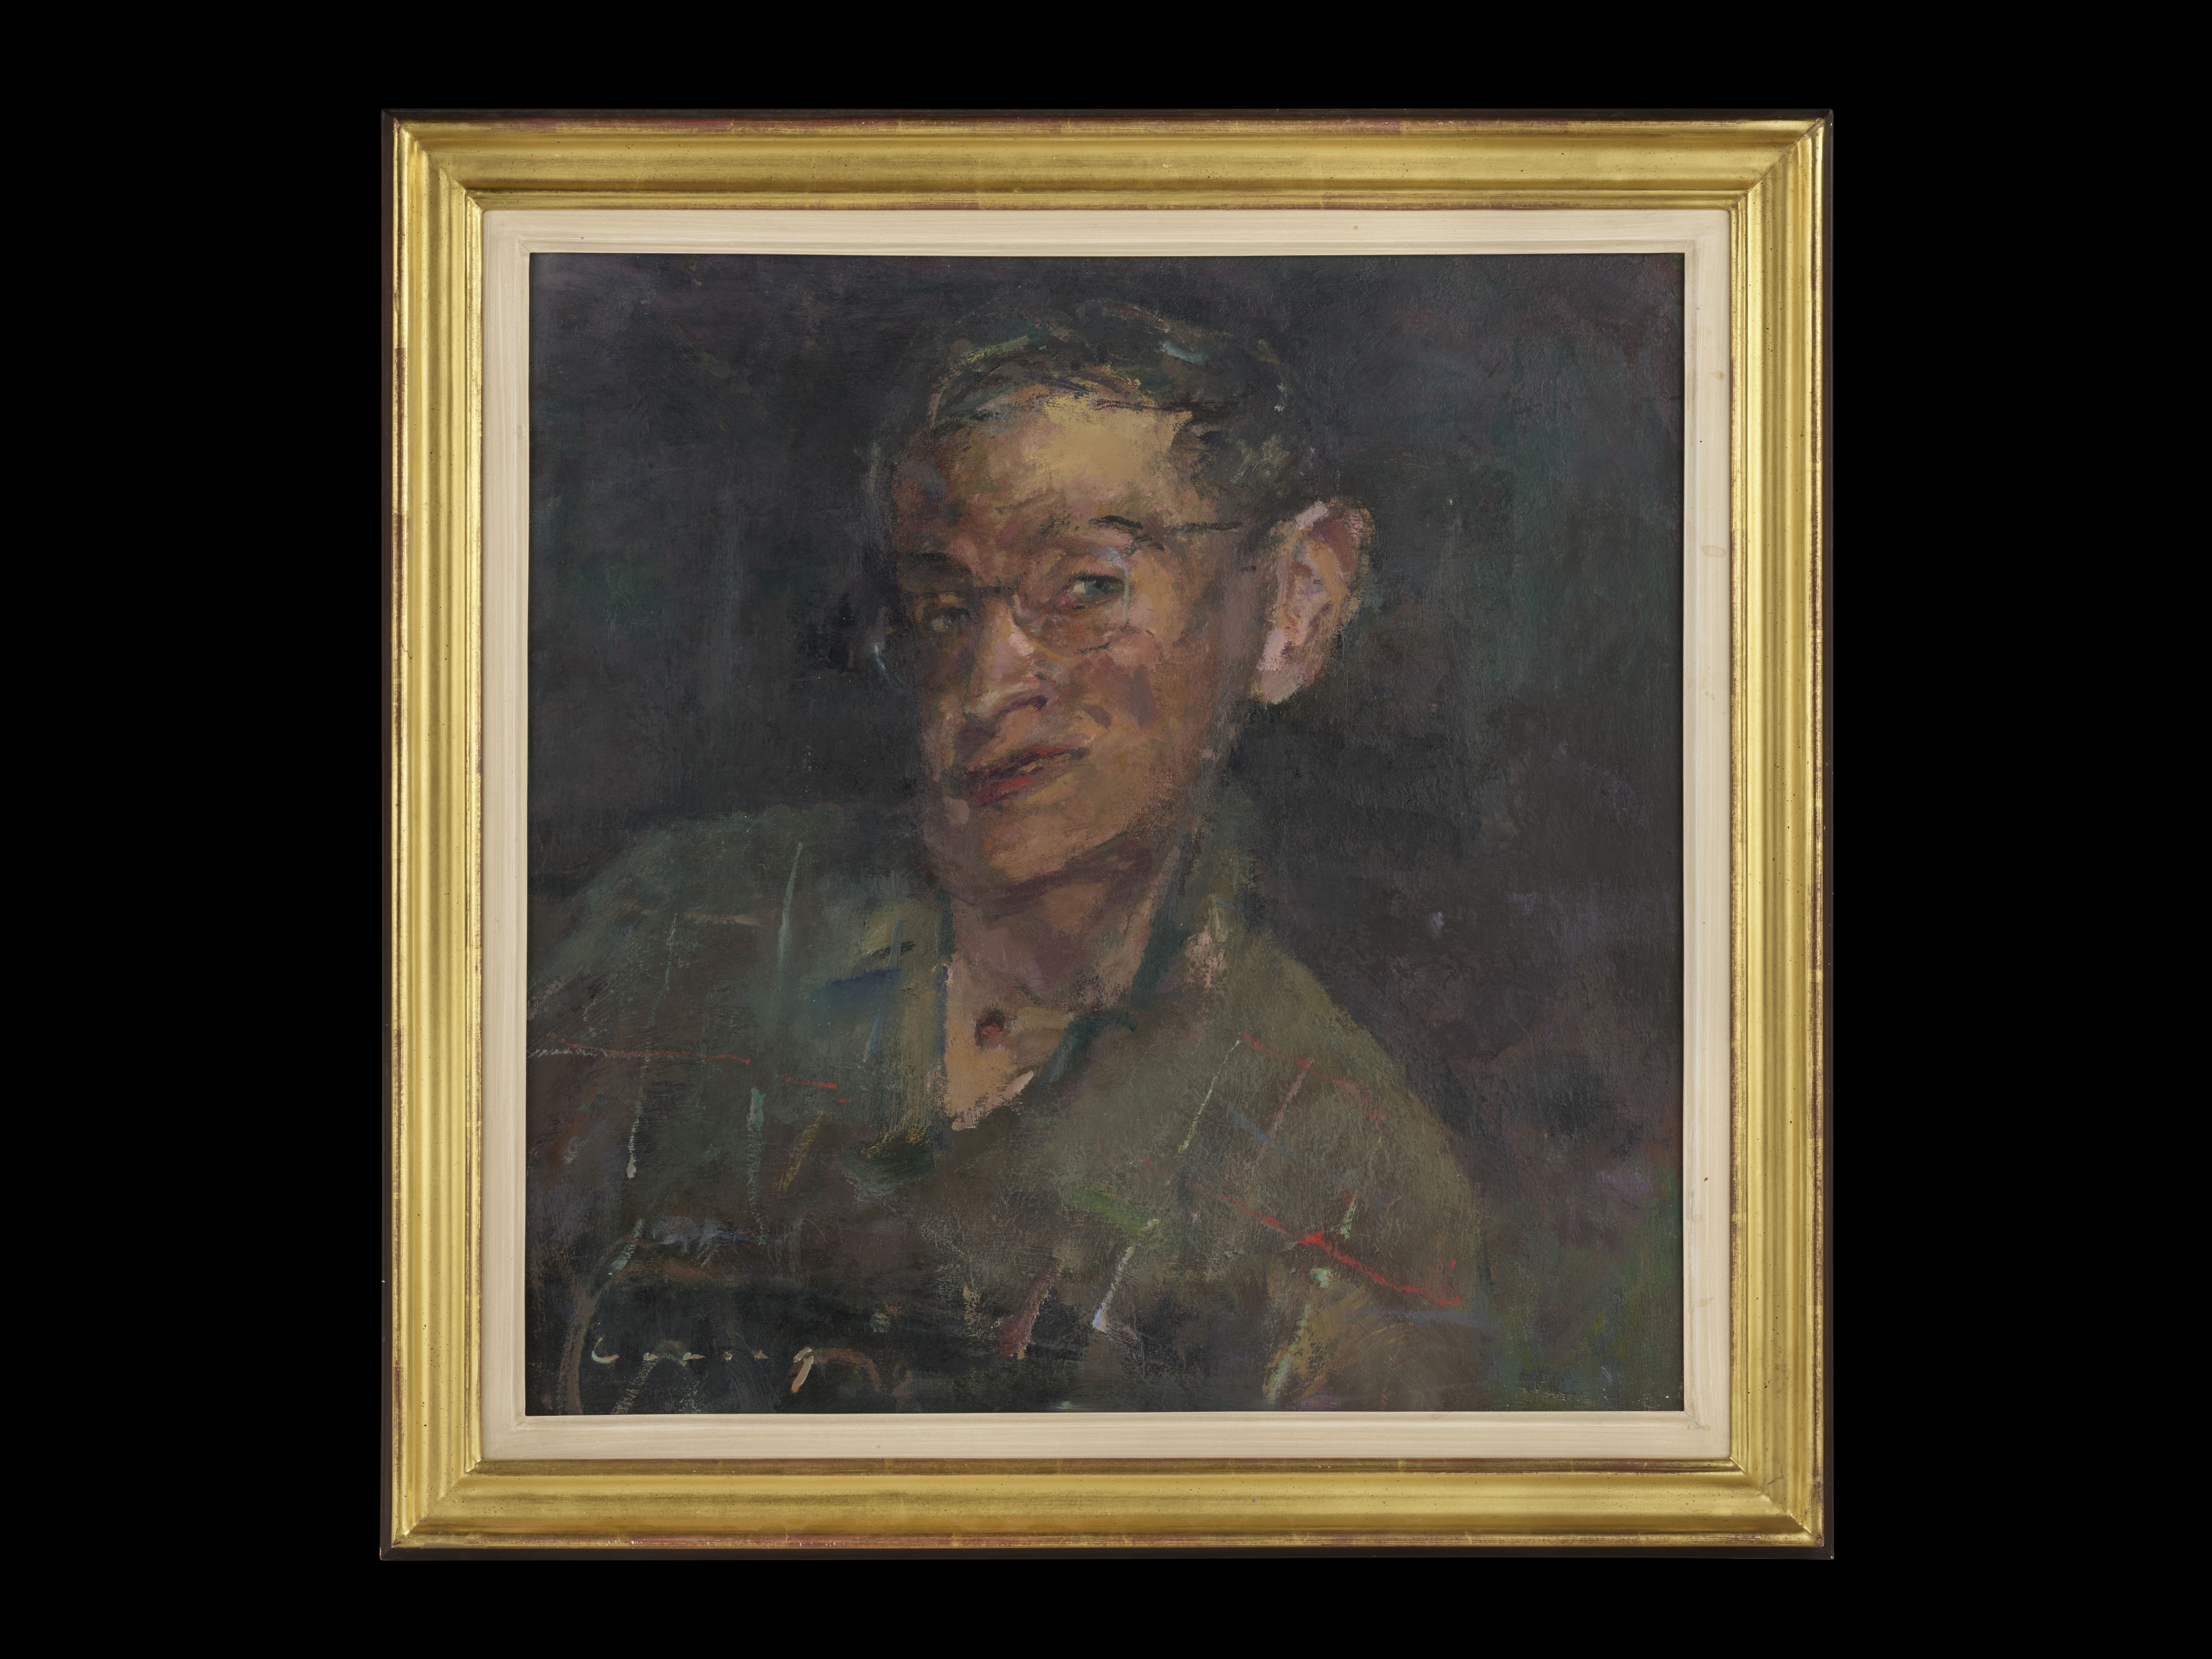 Oil painting portrait of Professor Stephen Hawking